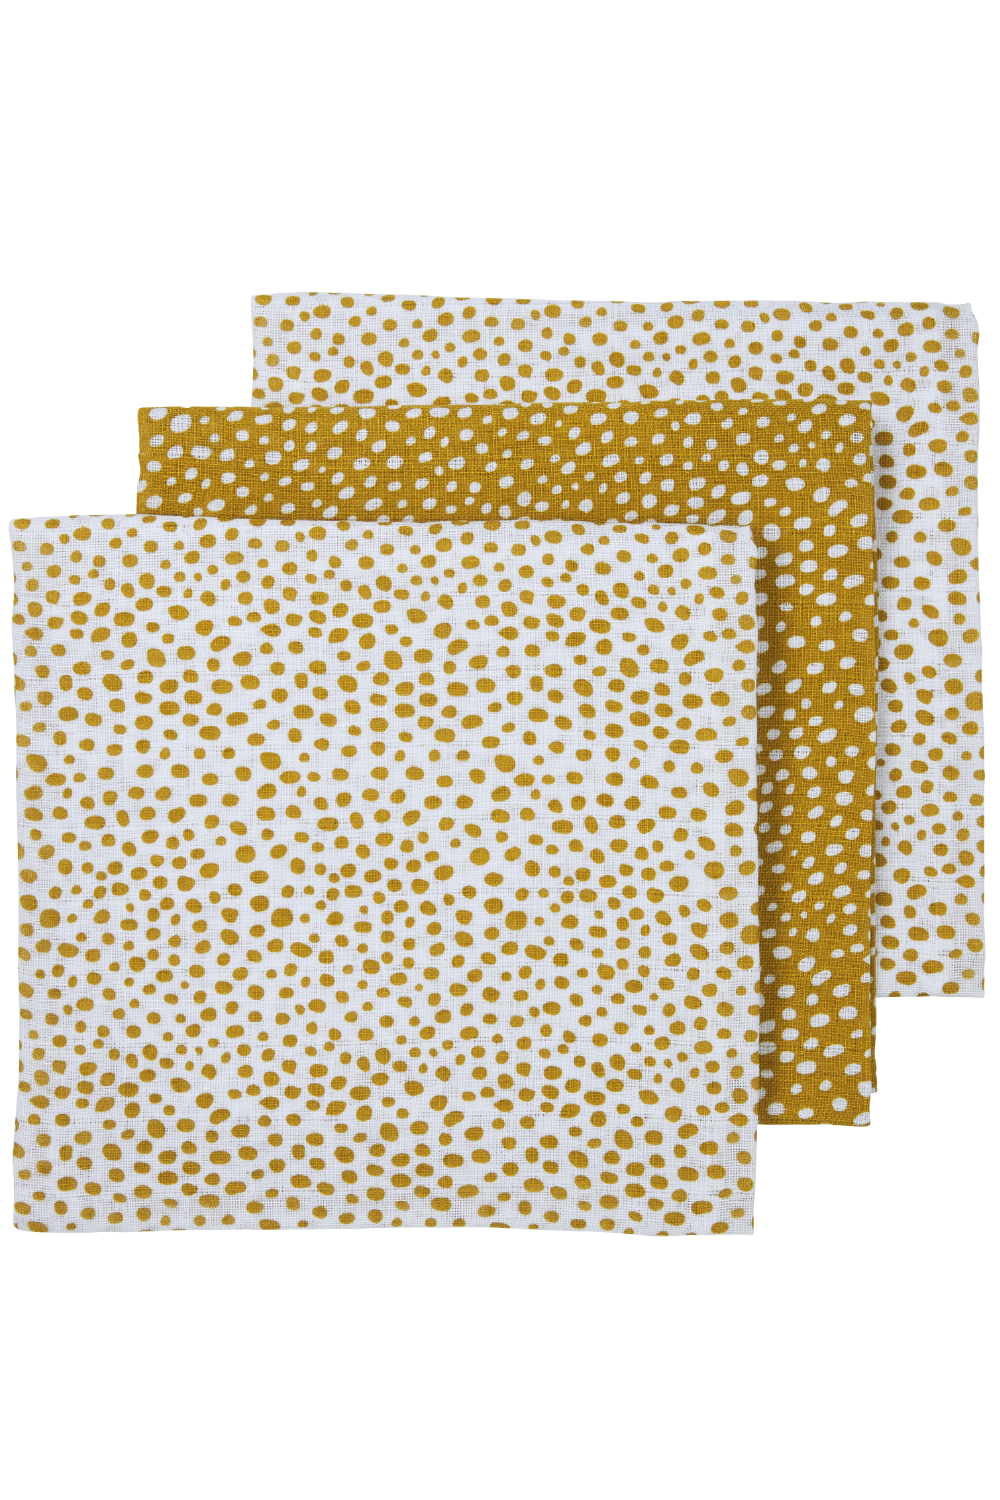 Square 3-pack Cheetah - honey gold - 70x70cm